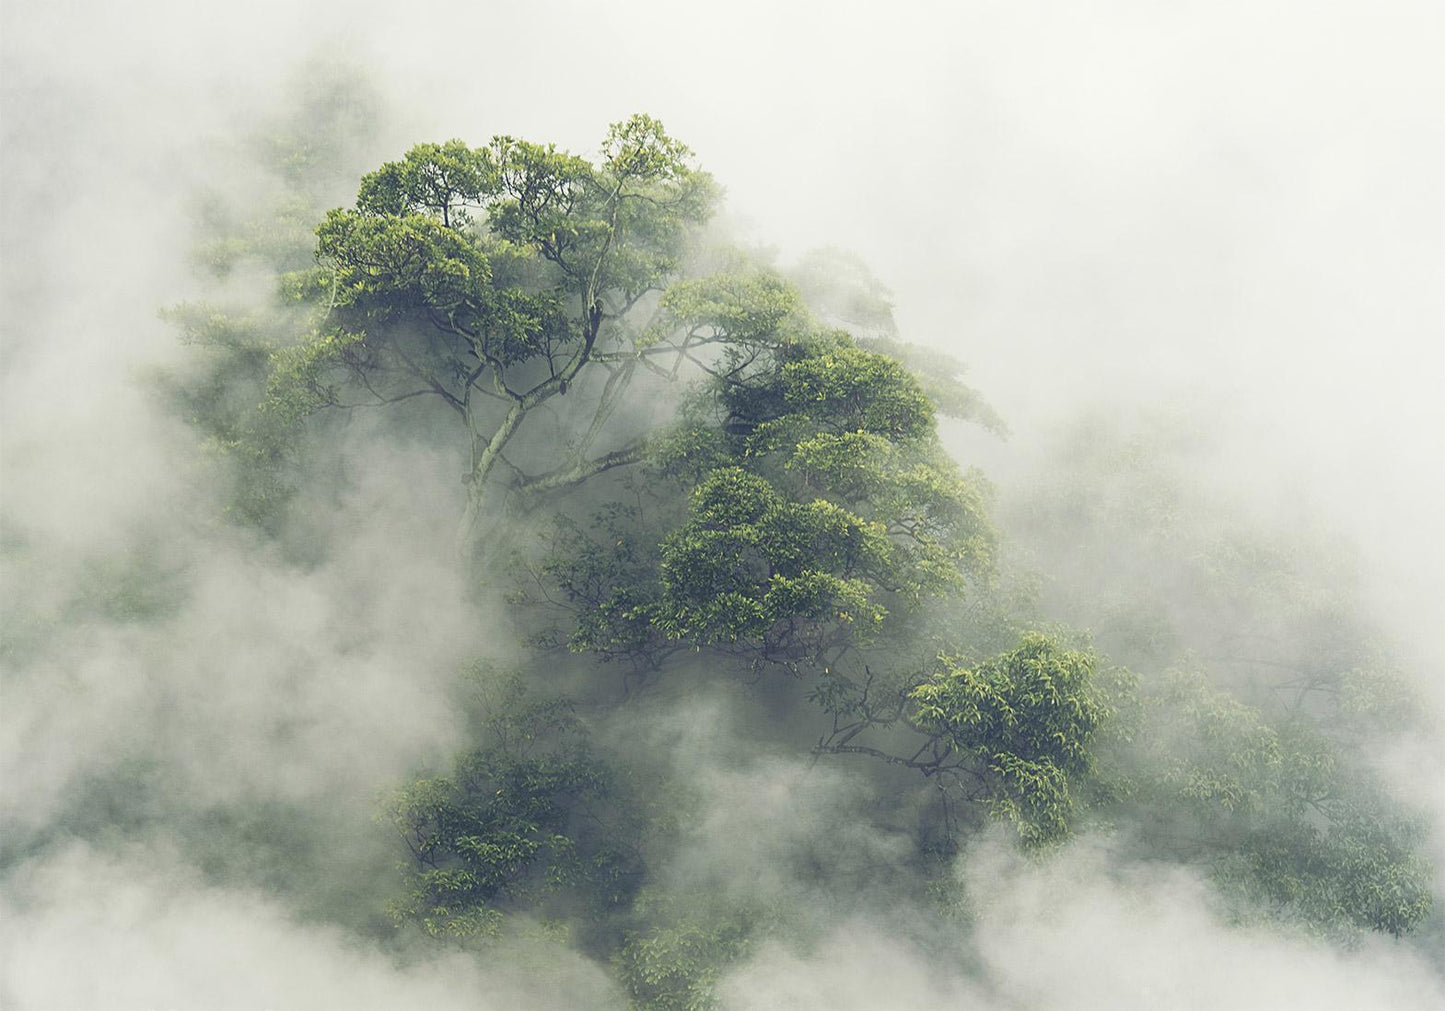 Photo Wallpaper - Foggy Amazon